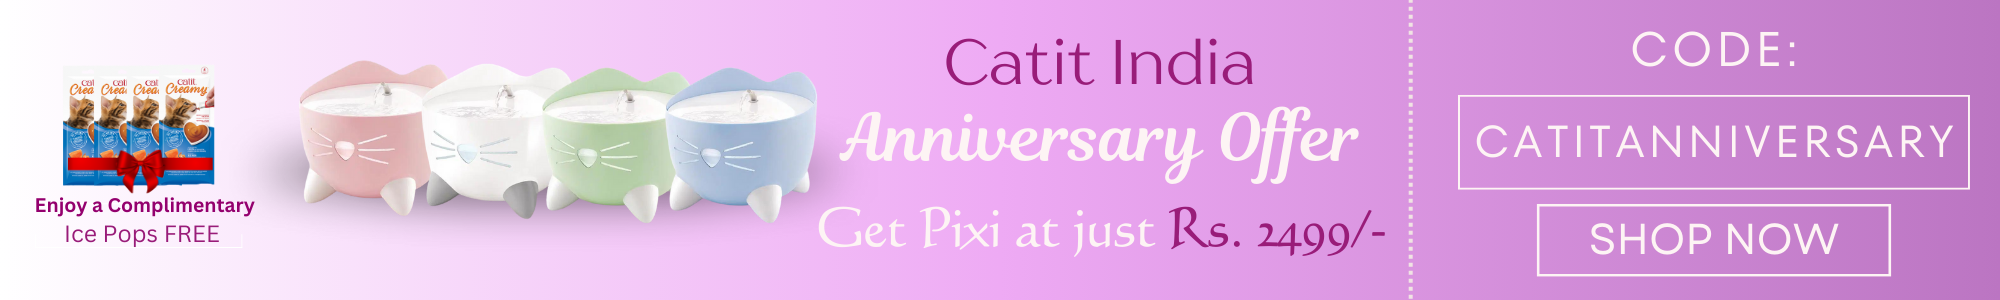 catit anniversary offer